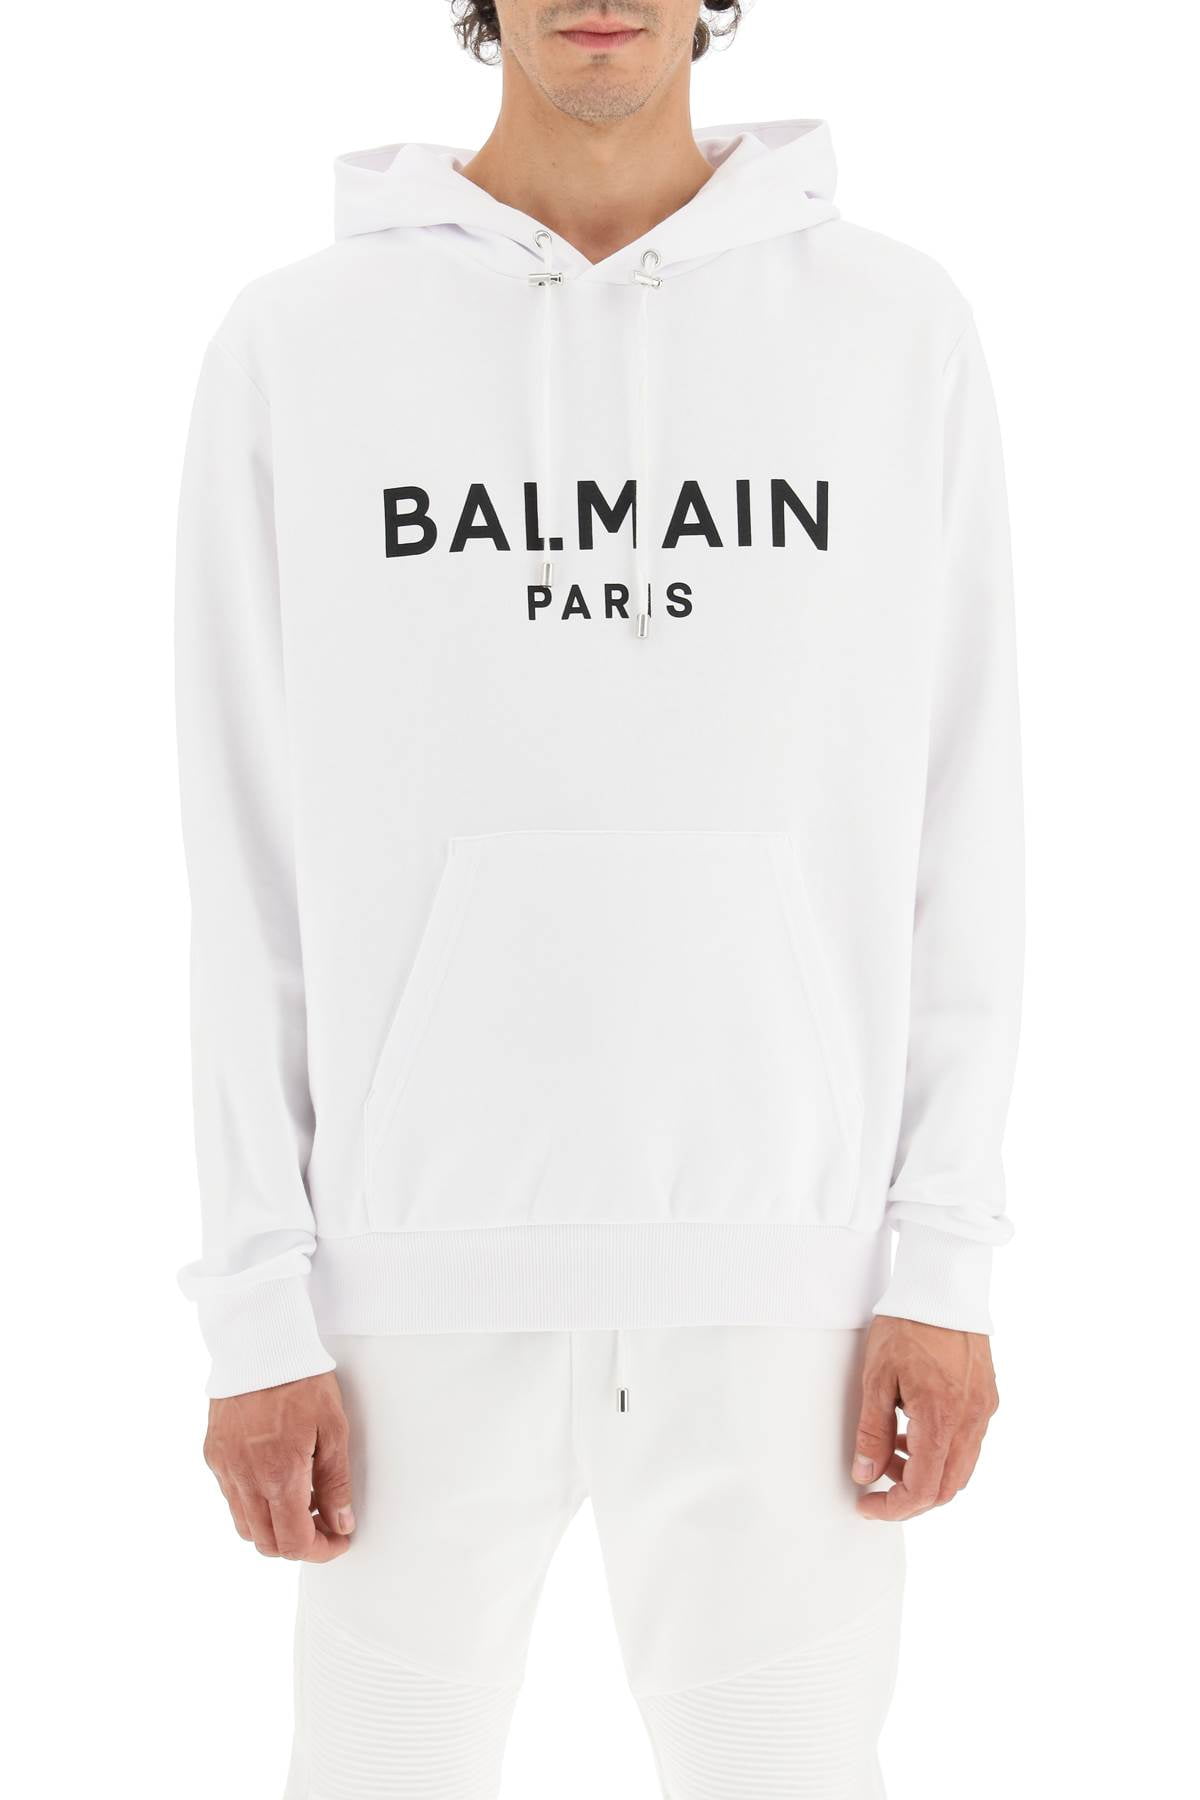 Balmain hoodie - Walmart.com